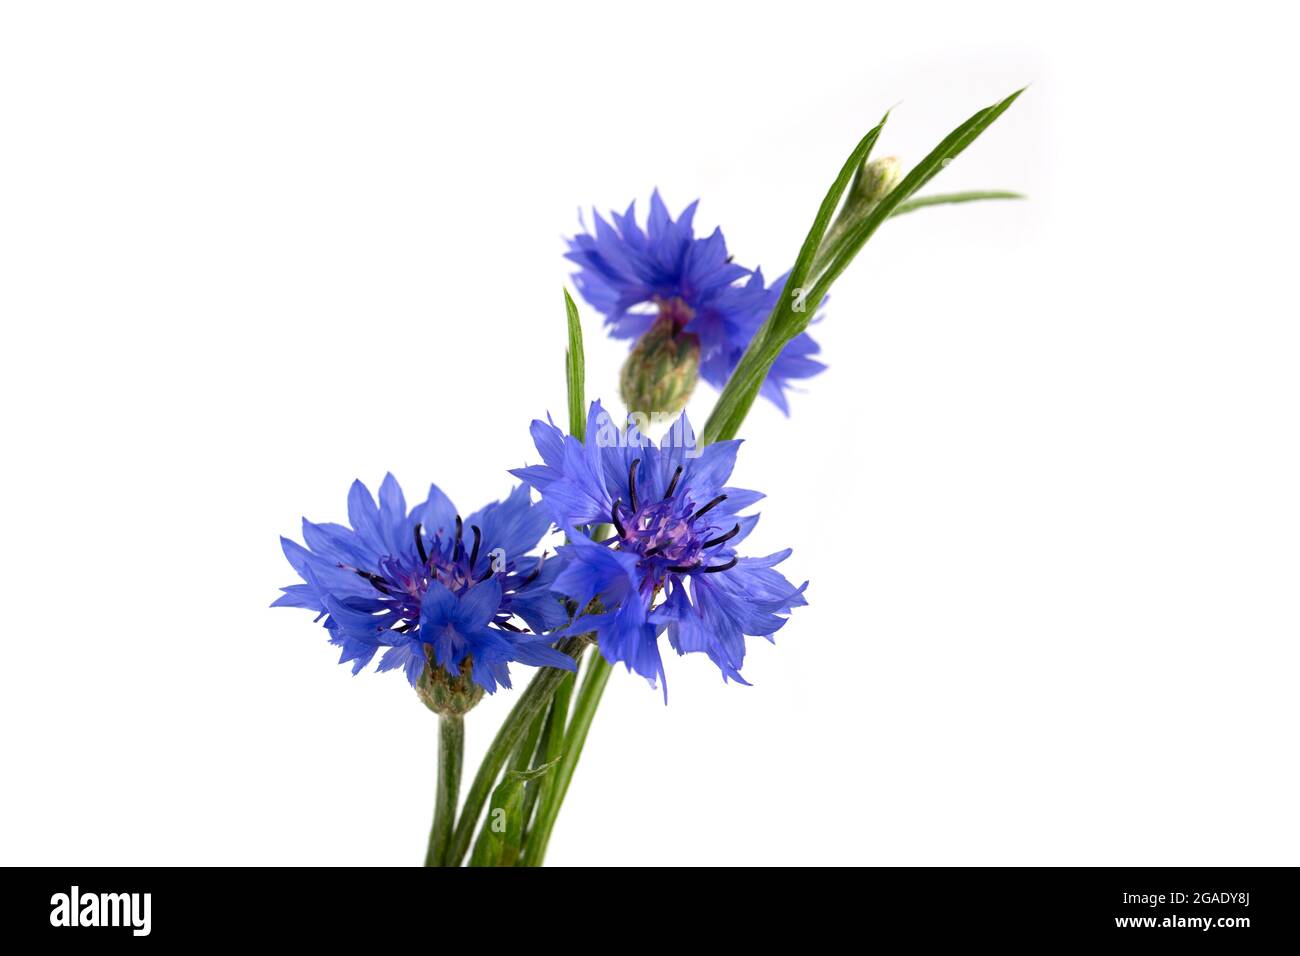 Blue cornflower (Centaurea cyanus) on a white background. Poster. Stock Photo